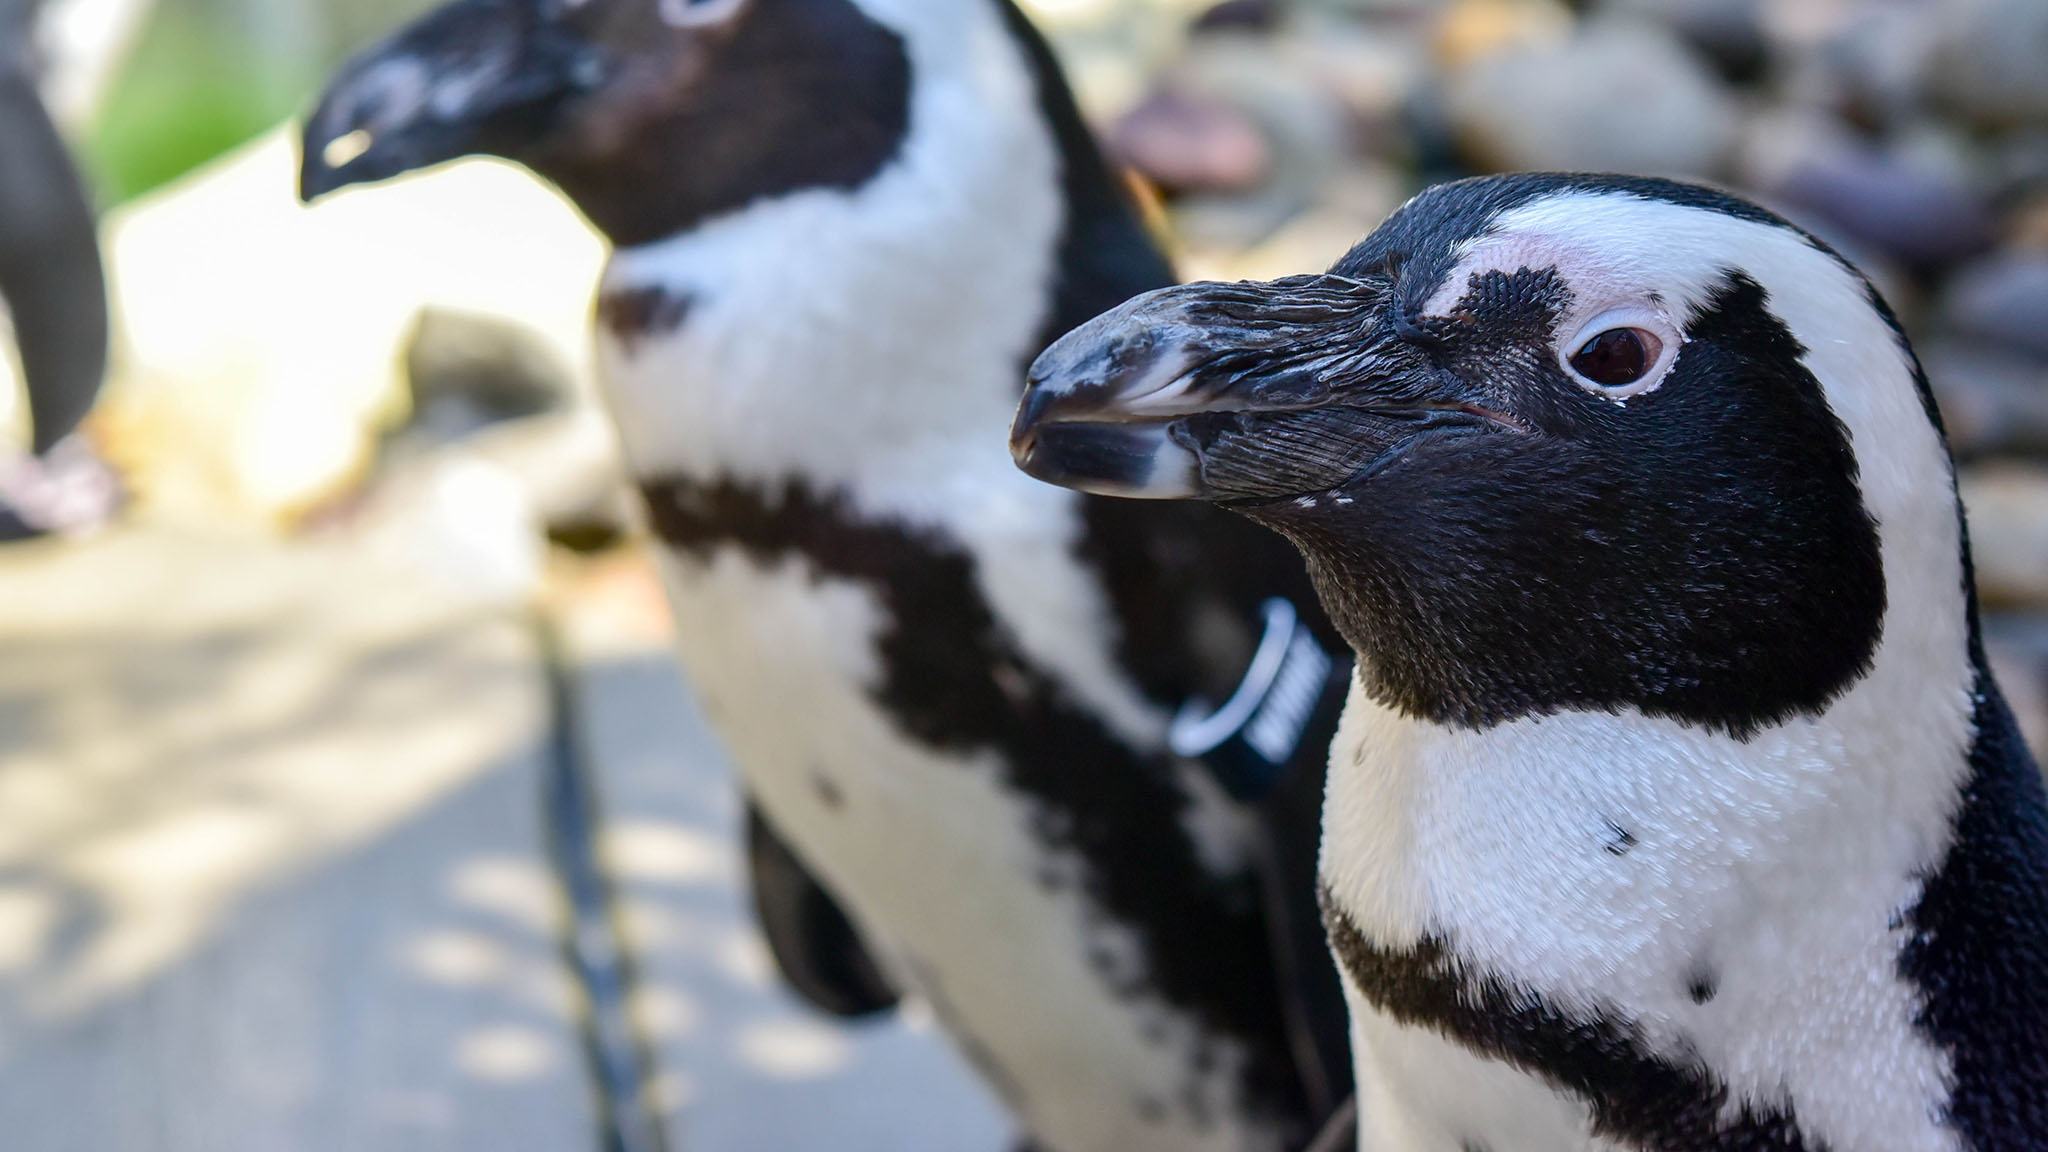 Penguin Encounters | The Maryland Zoo